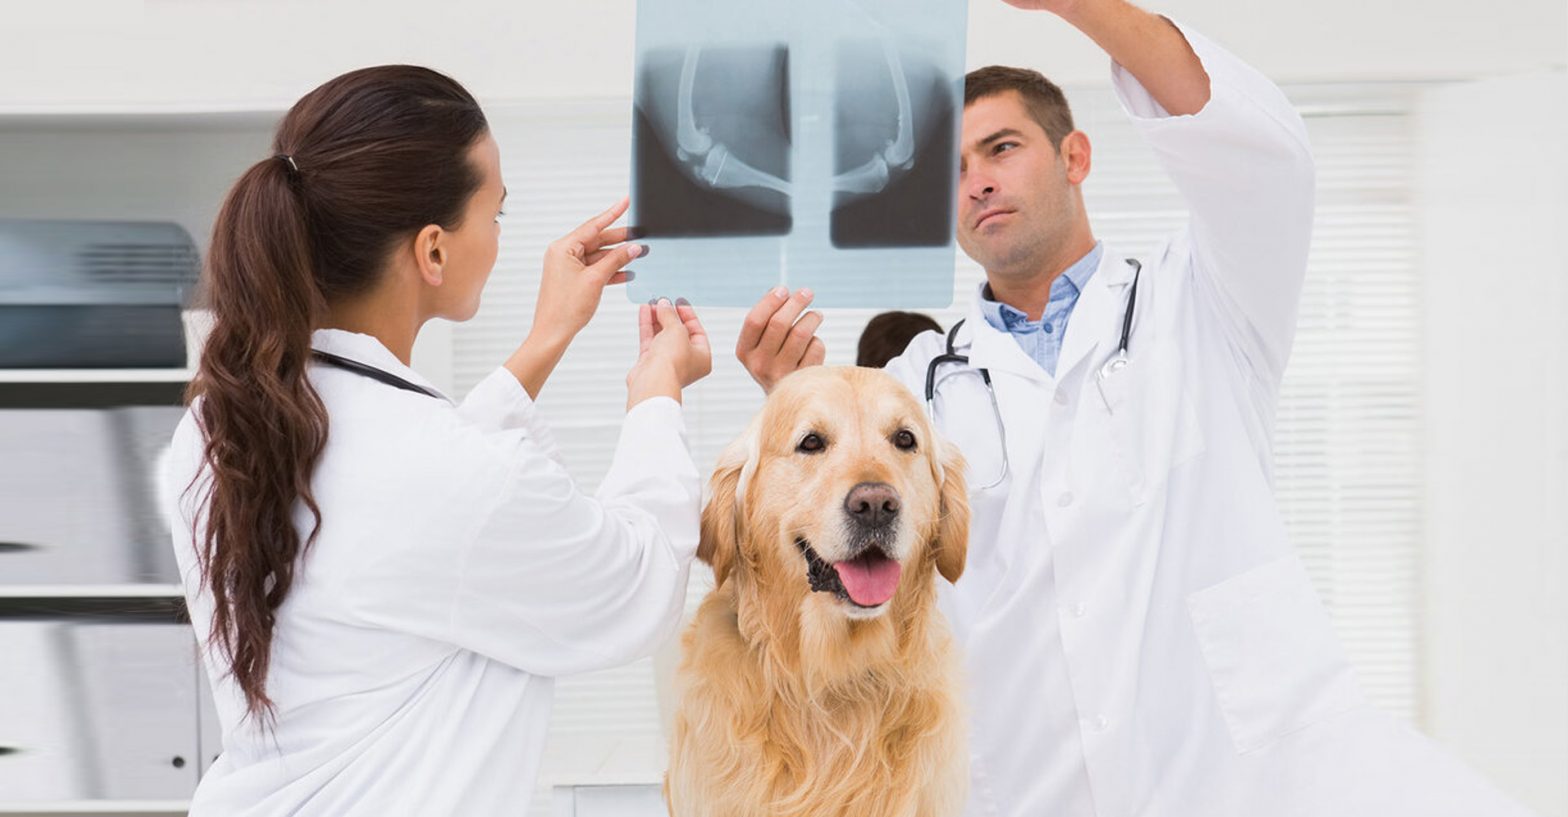 lindsay giguiere, examining dogs x-ray